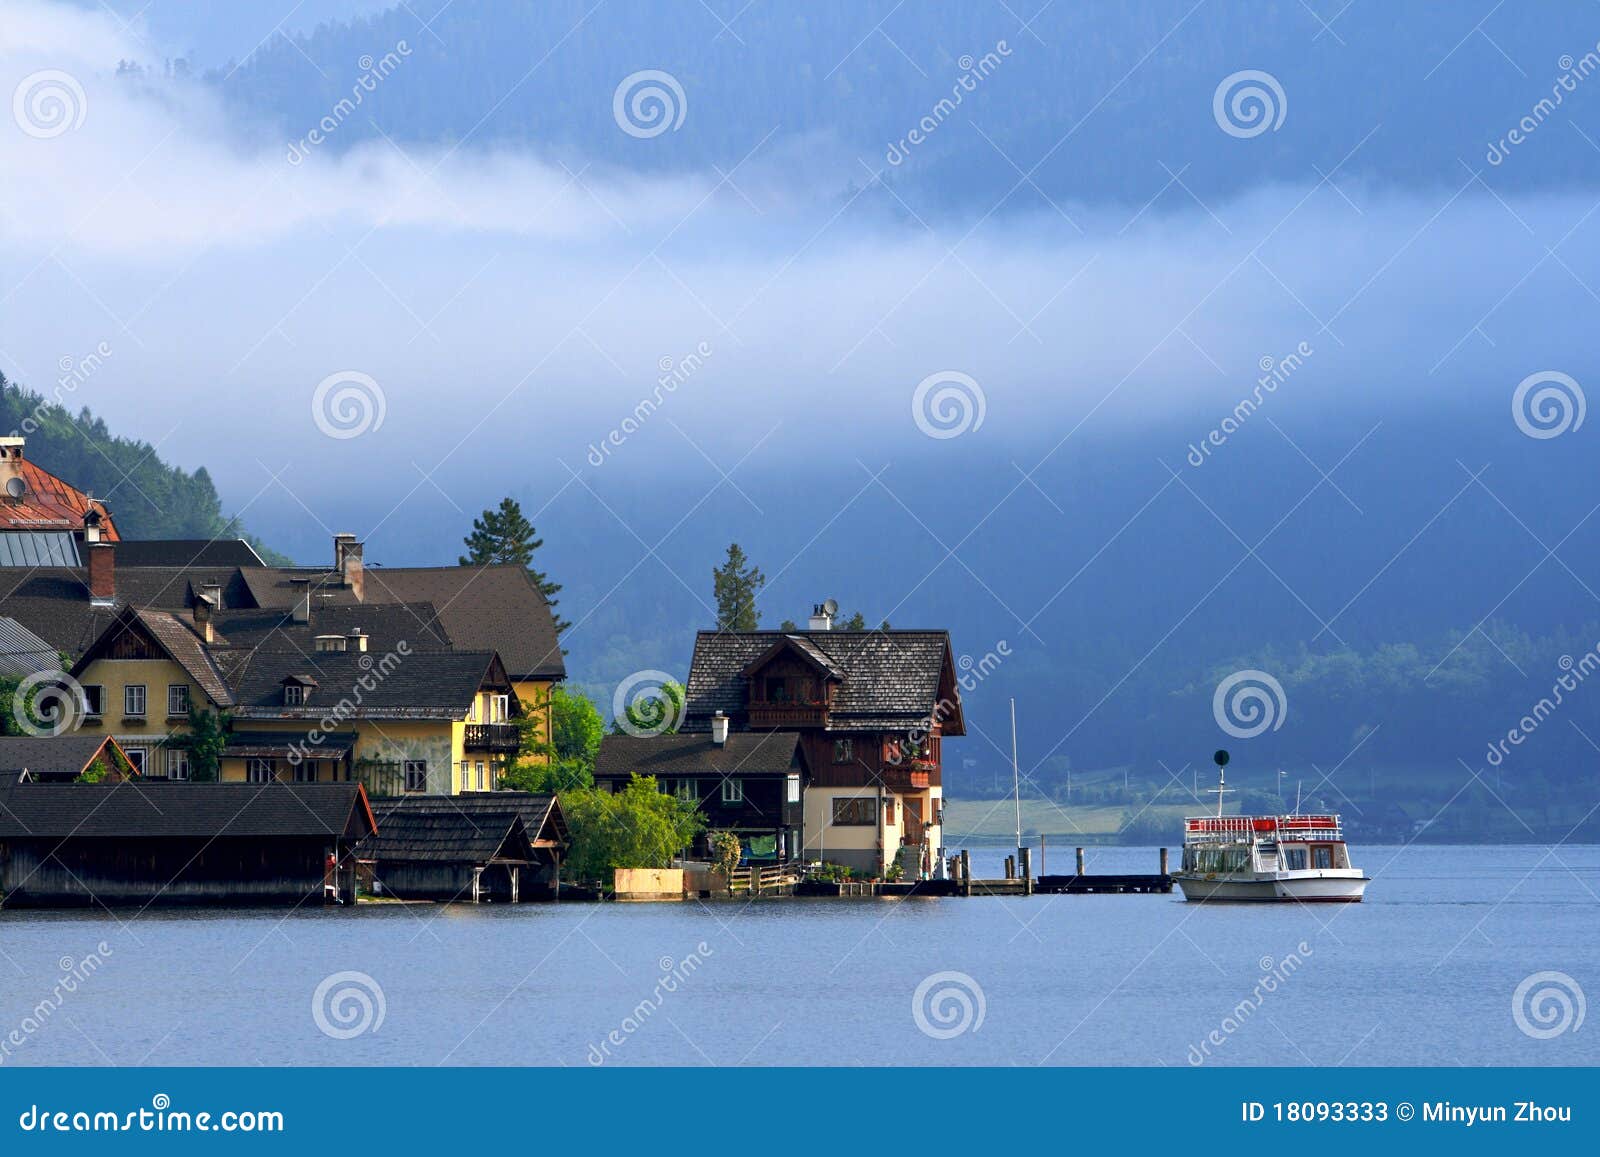 village on lake, austria